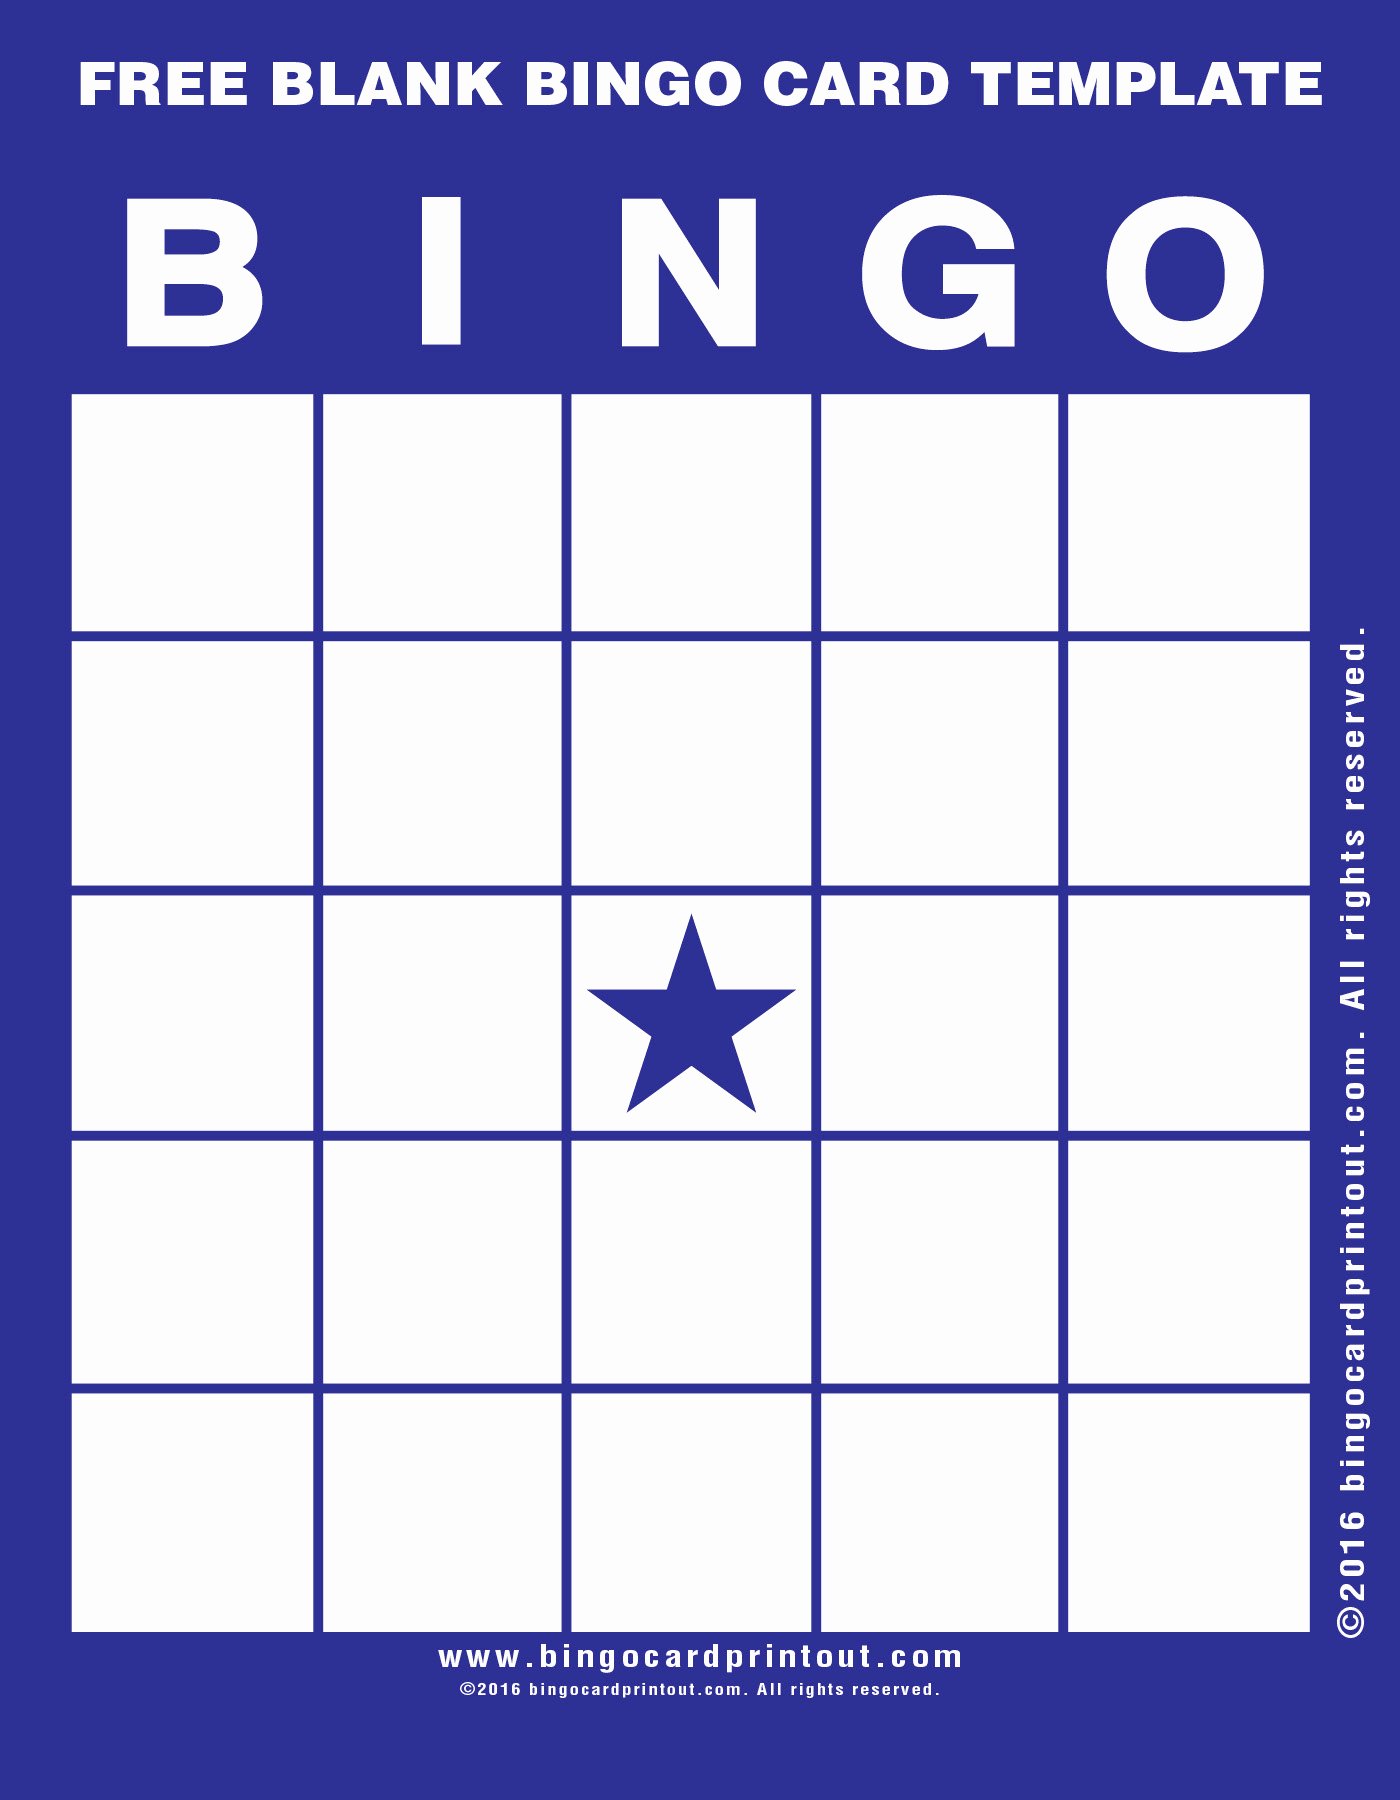 Free Blank Bingo Card Template Bingocardprintout